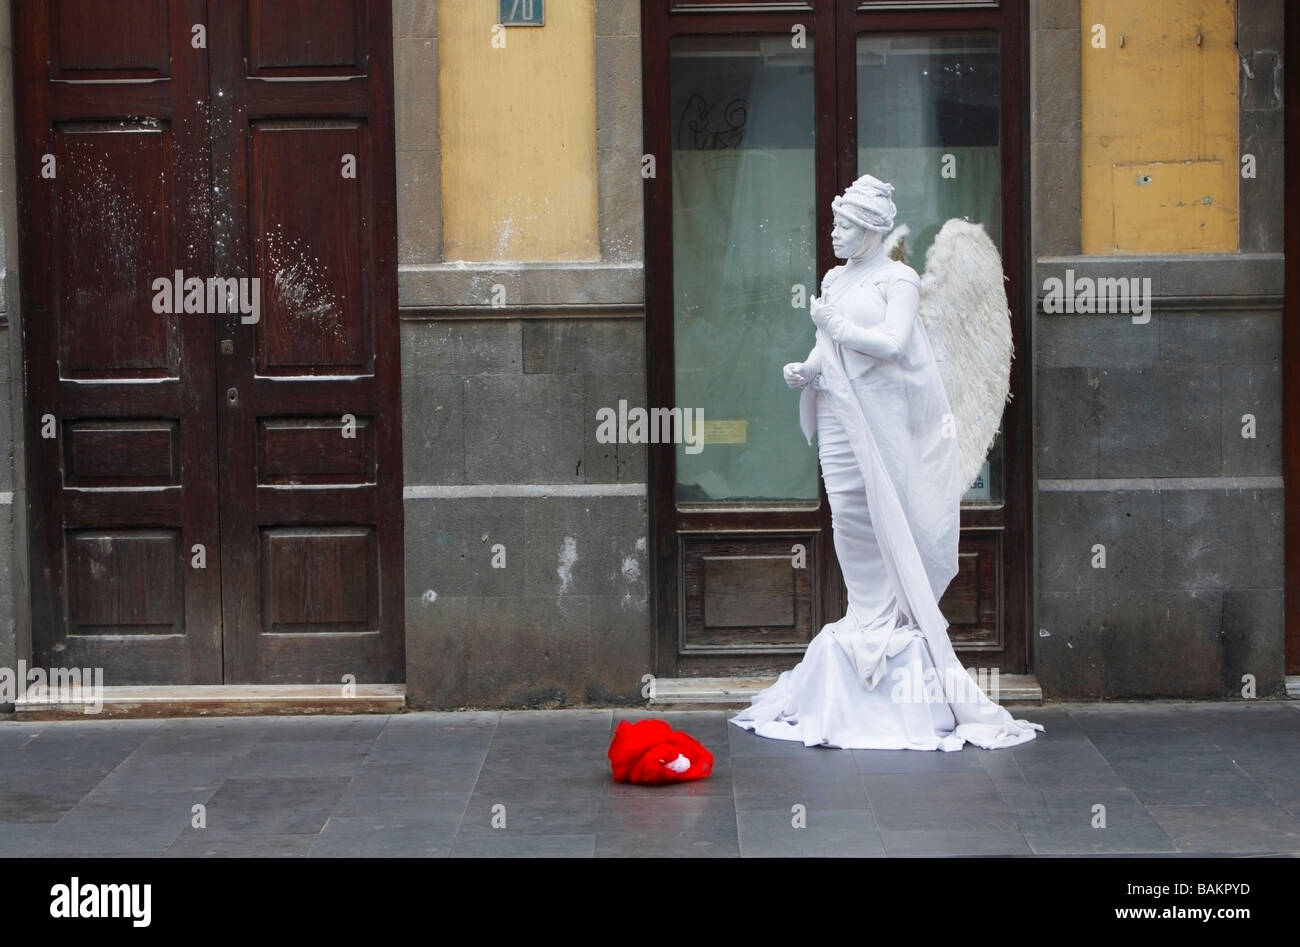 Artiste de rue déguisés en ange de la rue en rue en Espagne Banque D'Images